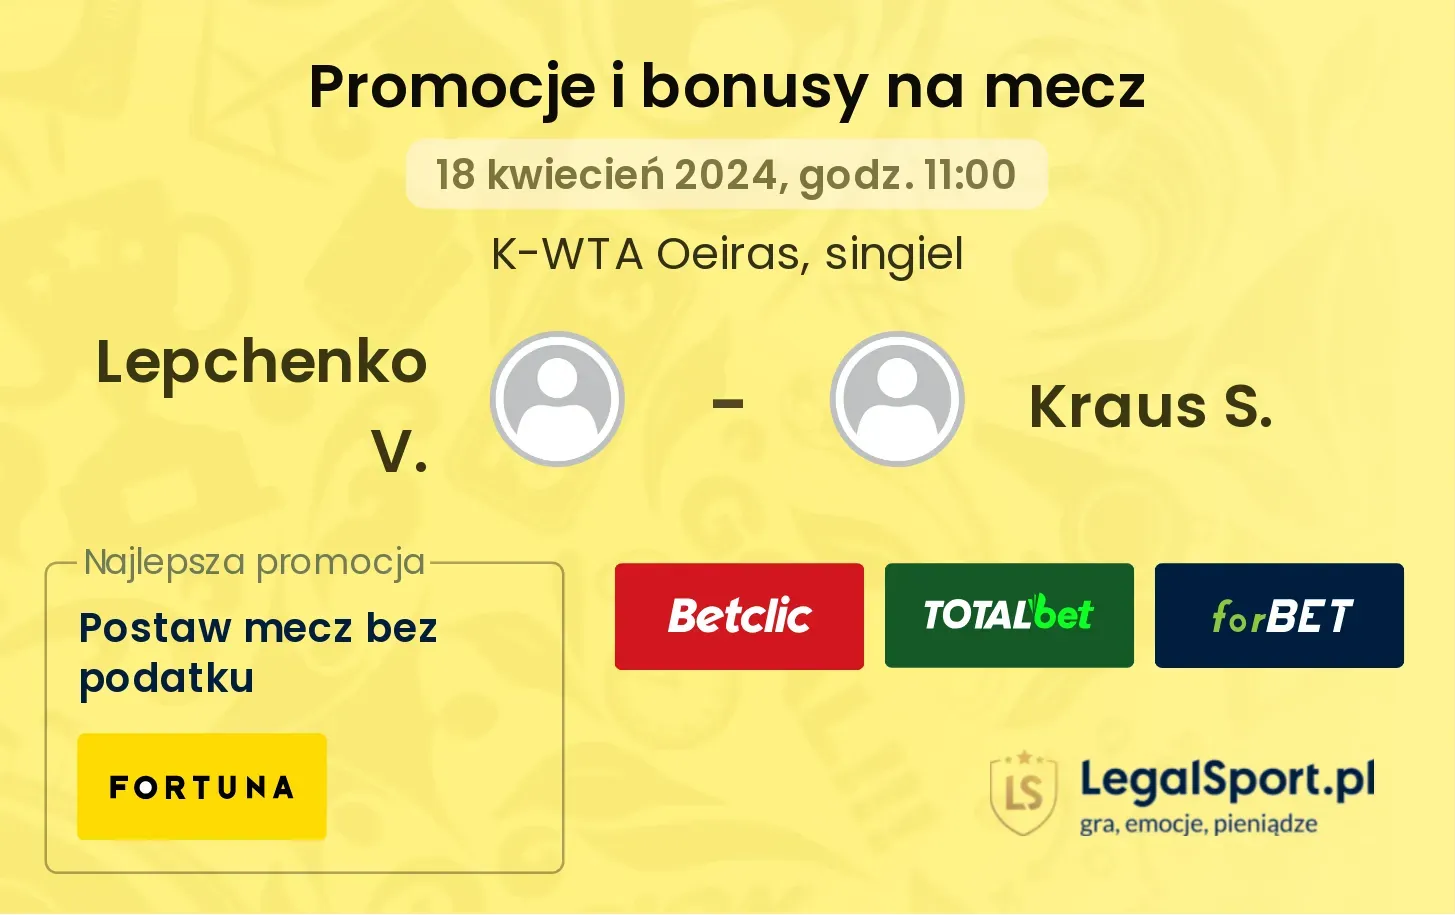 Lepchenko V. - Kraus S. promocje bonusy na mecz